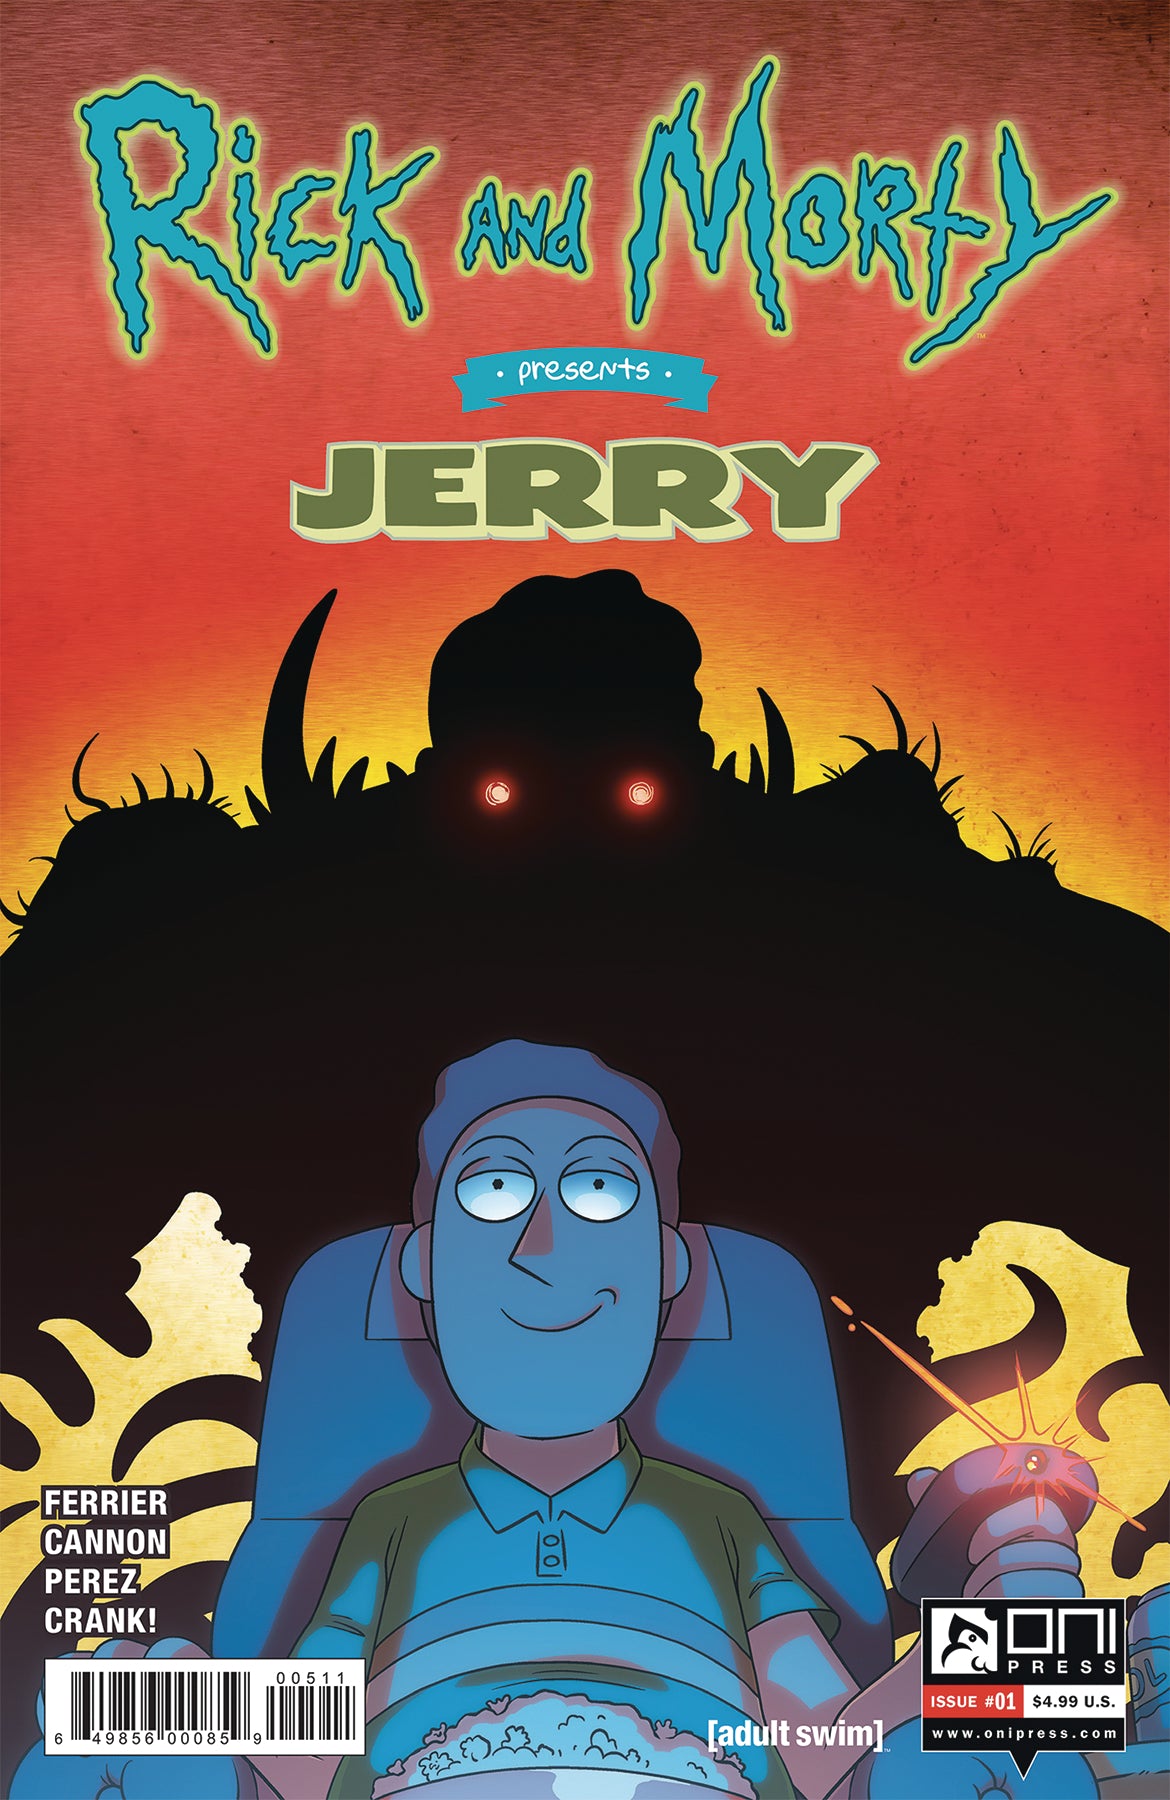 RICK & MORTY PRESENTS JERRY #1 CVR A COVER